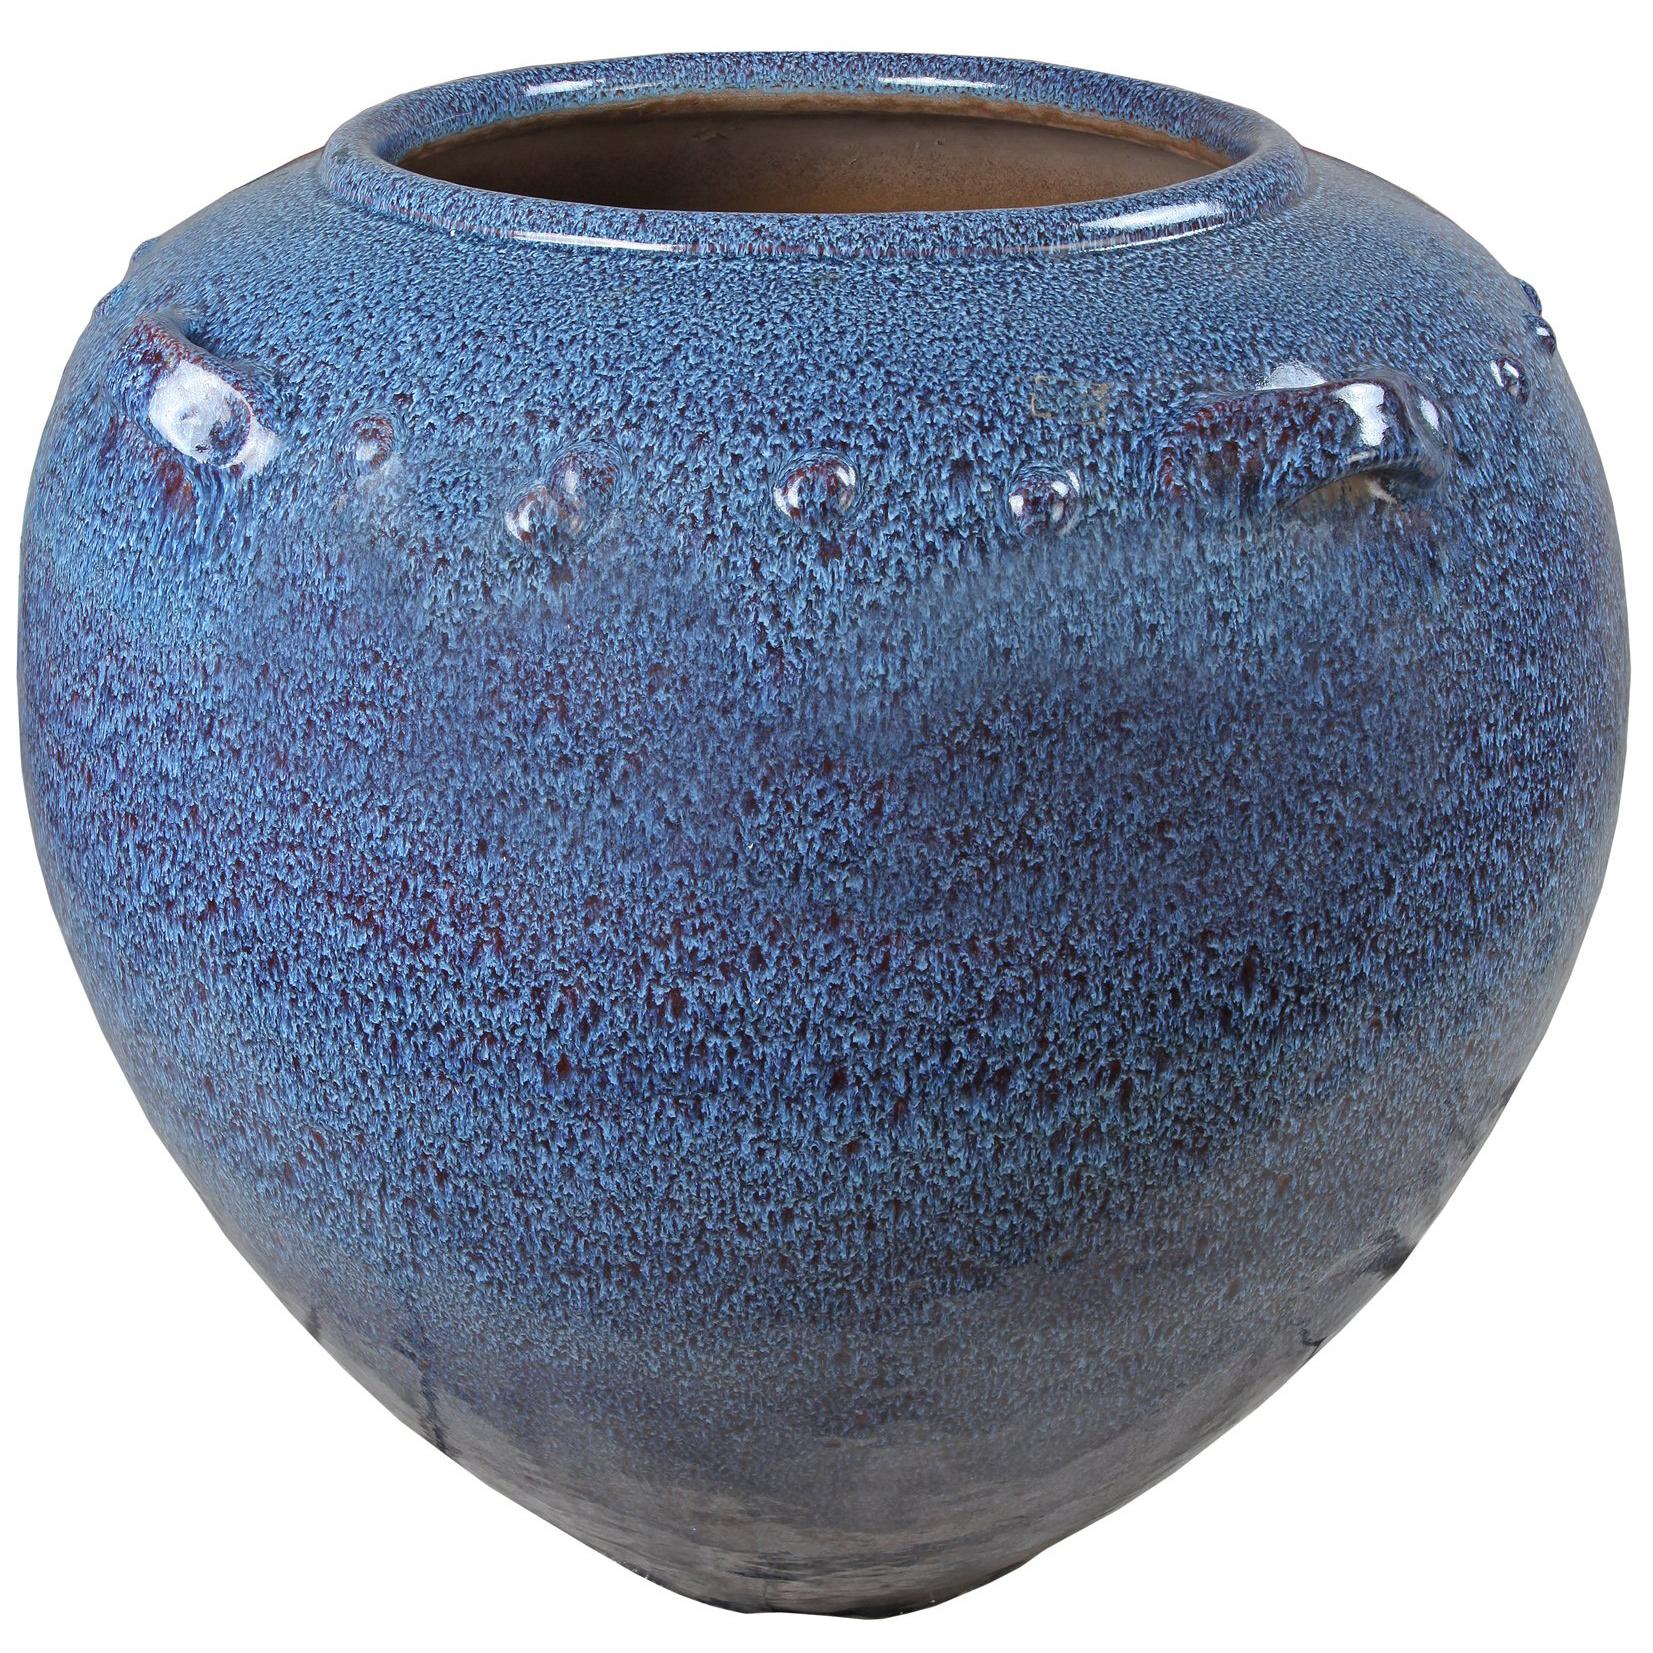 Very Large Ceramic Jardiniere Planter with Blue Glaze